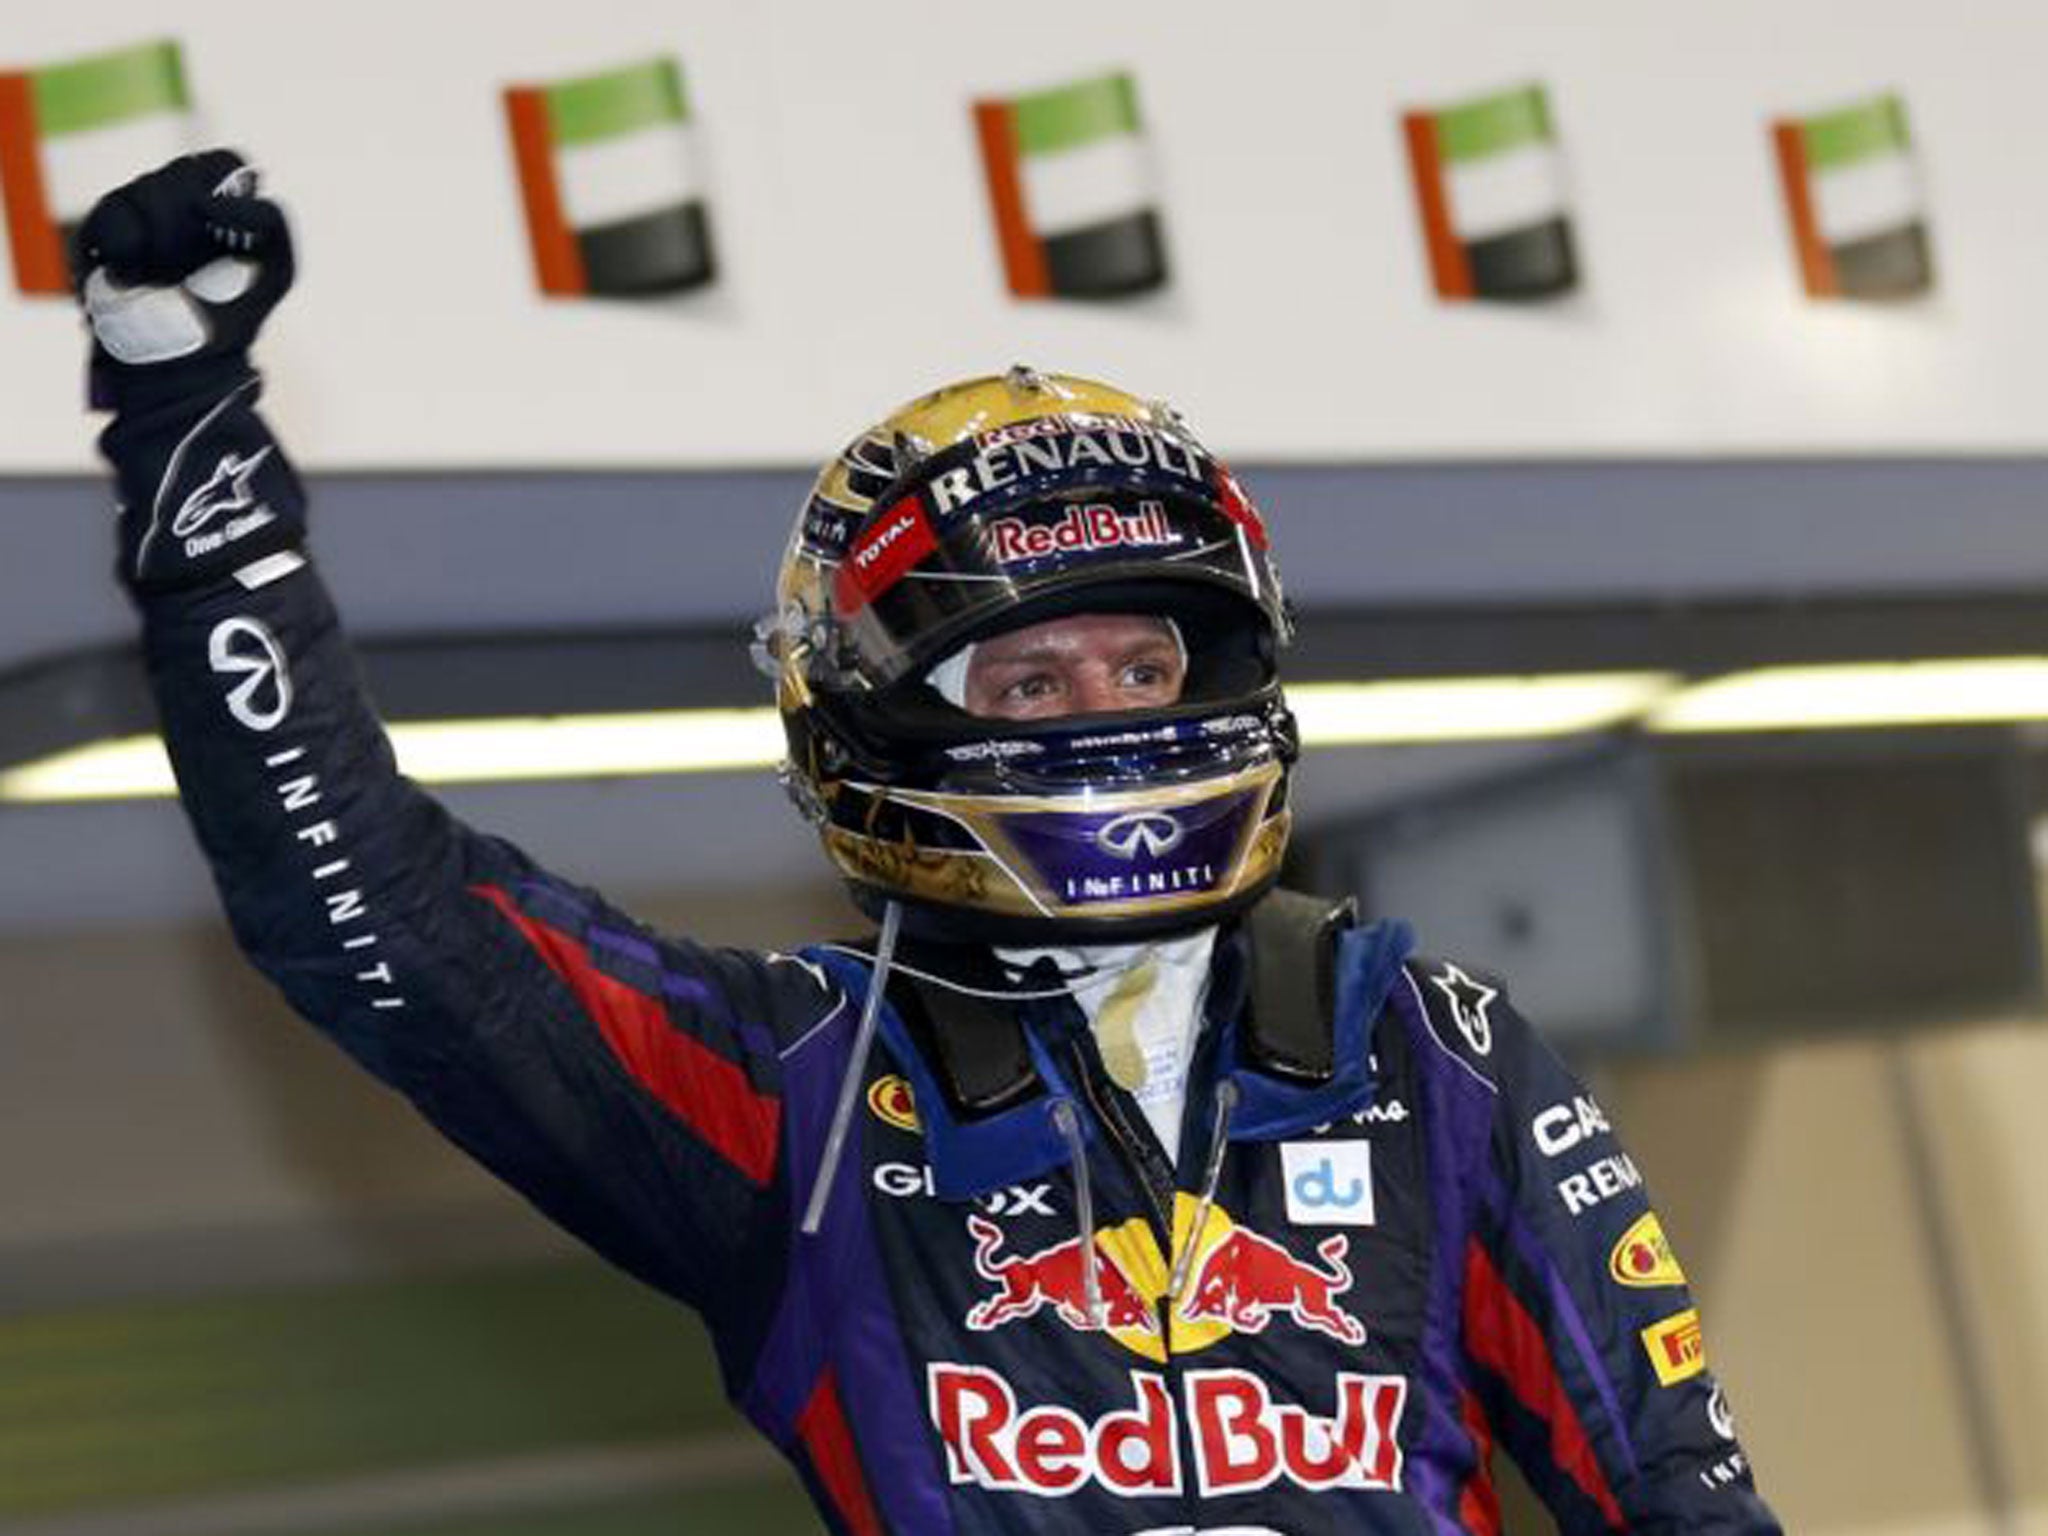 Red Bull Formula One driver Sebastian Vettel of Germany celebrates after winning the Abu Dhabi Grand Prix